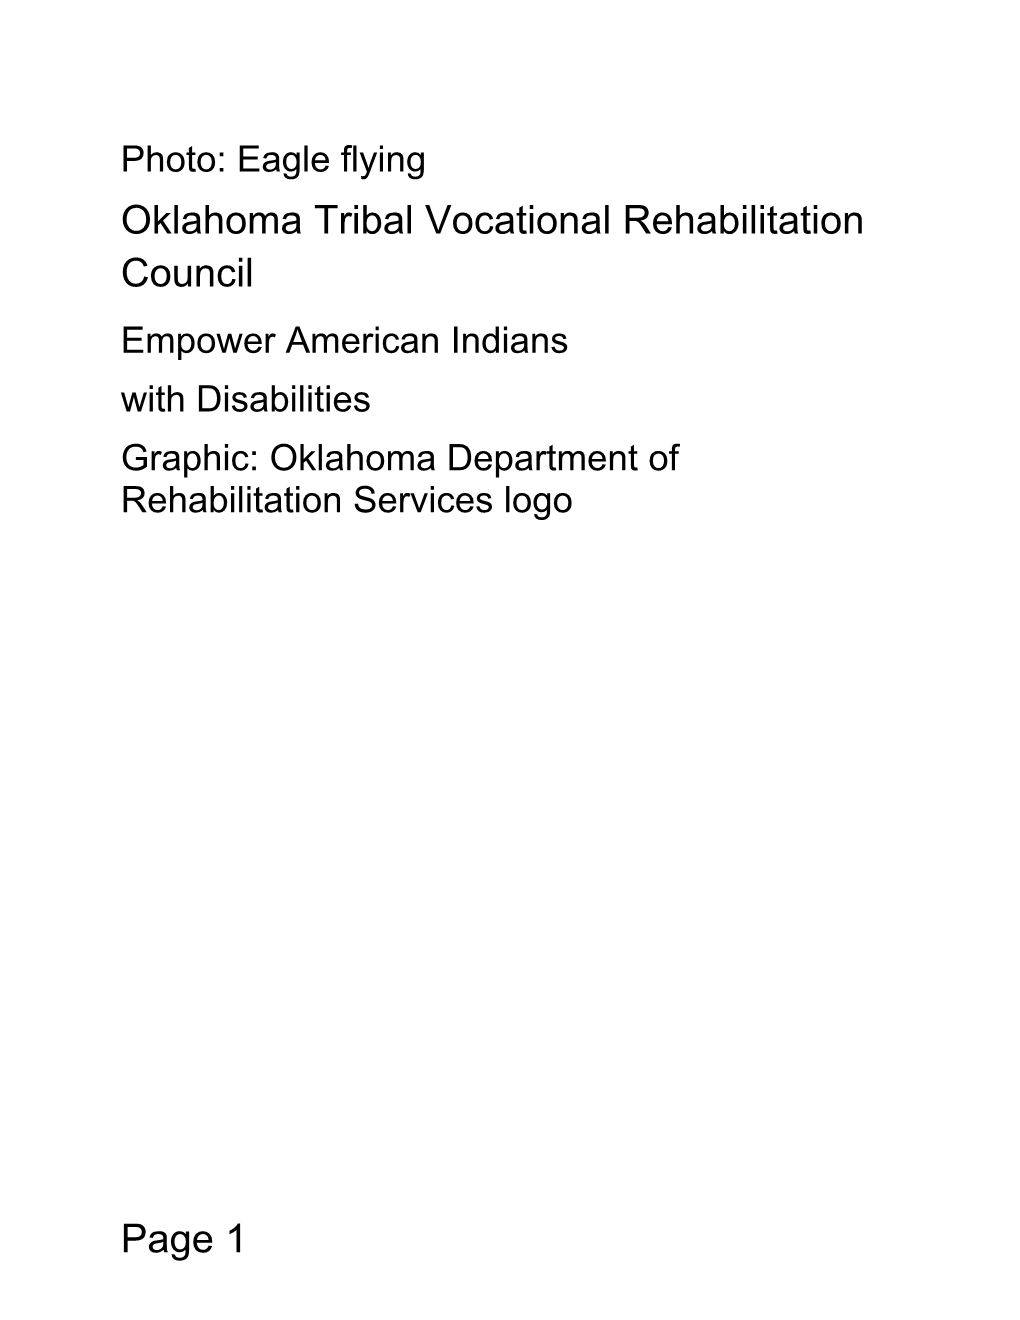 Oklahoma Tribal Vocational Rehabilitation Council